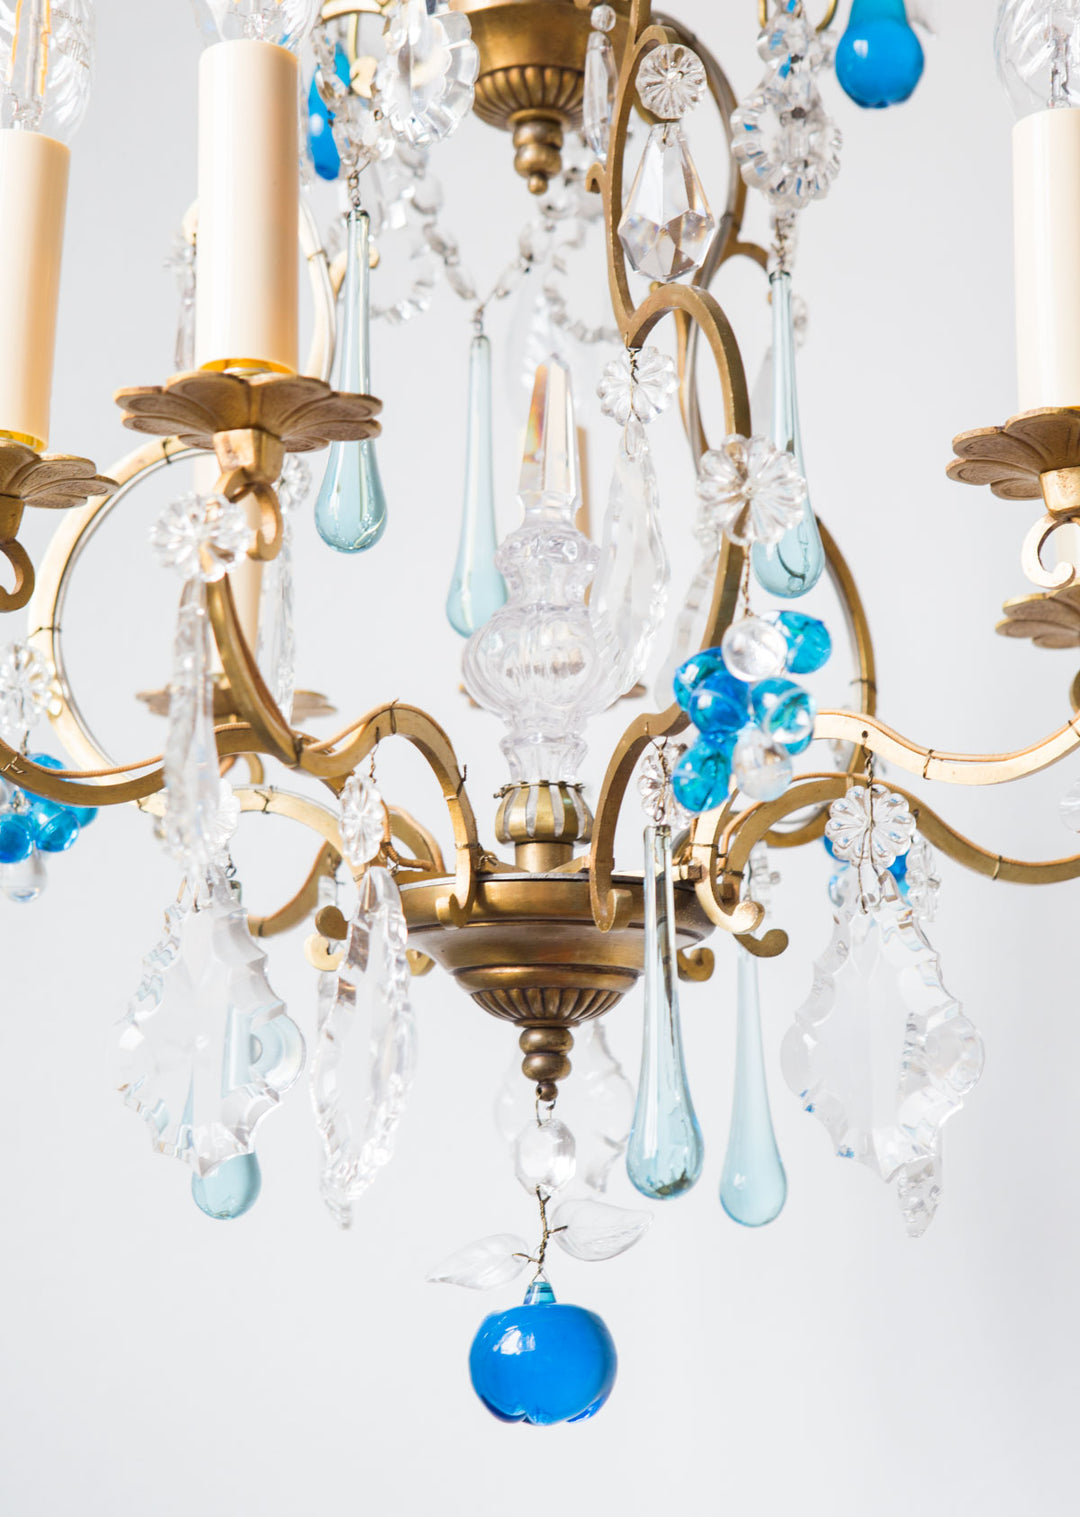 antigua lámpara de techo araña francesa con cristales antique vintage french chandelier lustre ancien blue azul